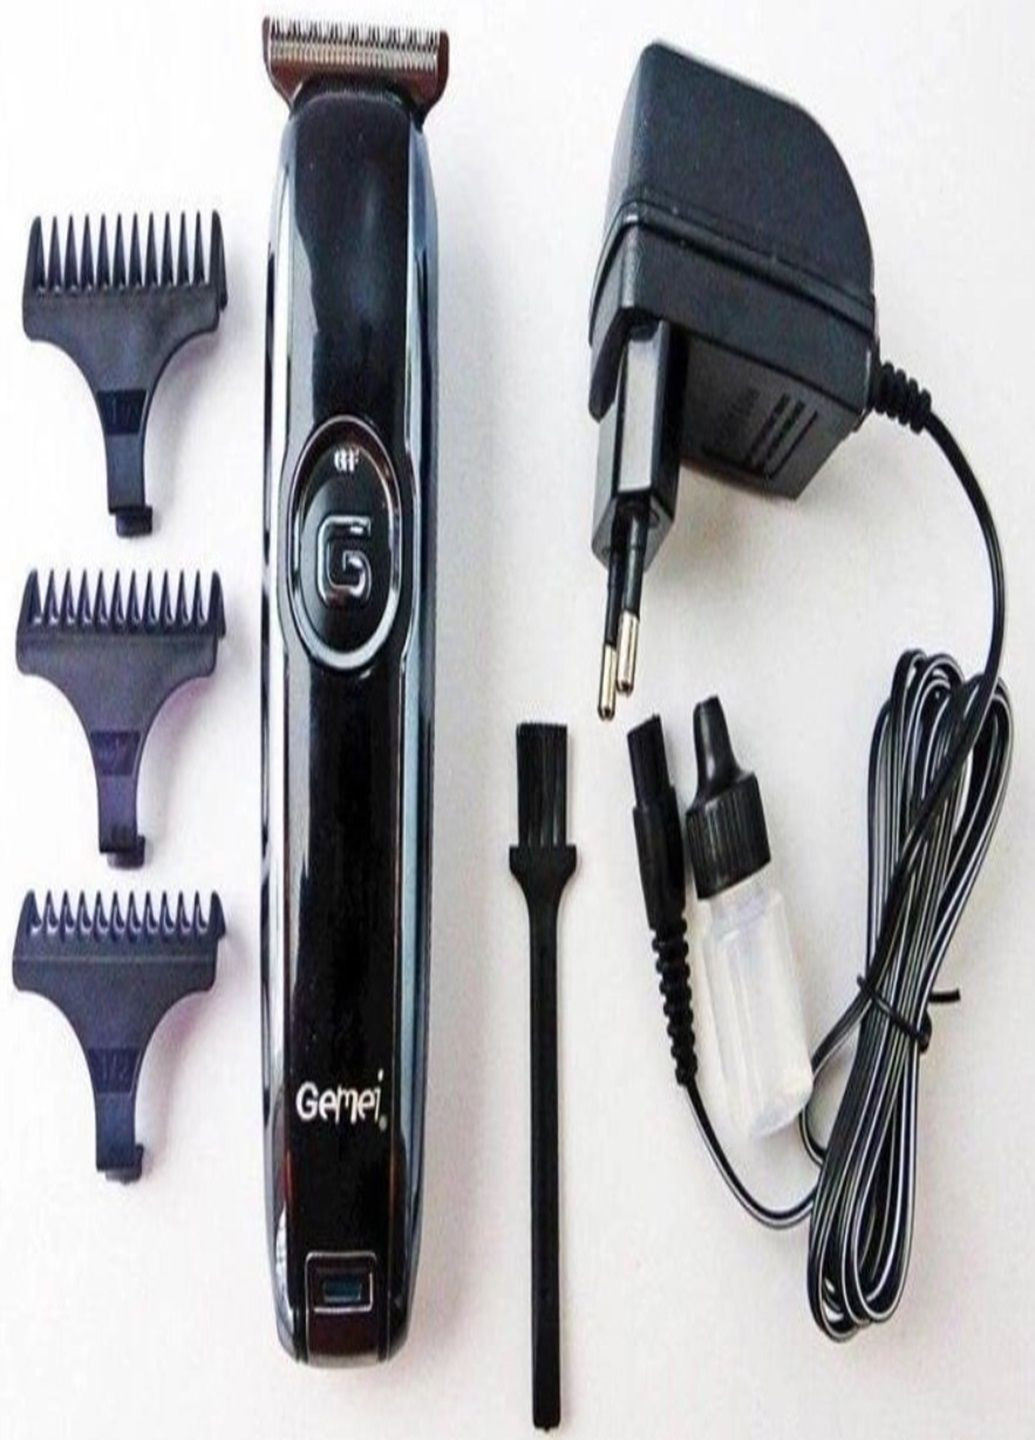 Машинка для стрижки волос GM-6050 Gemei (290186501)